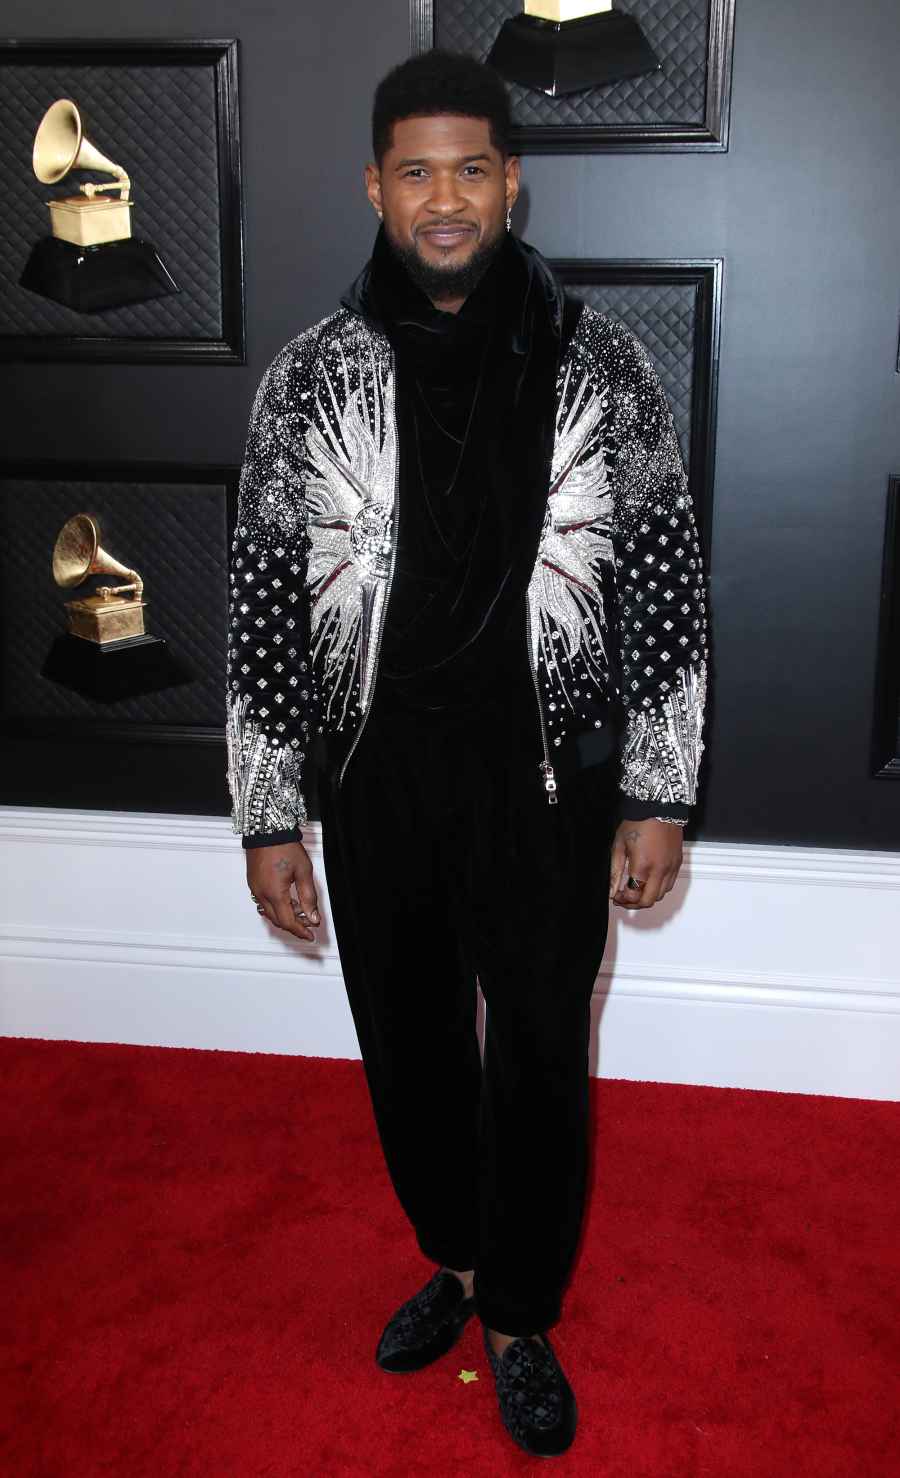 Grammy Awards 2020 Hottest Hunks - Usher